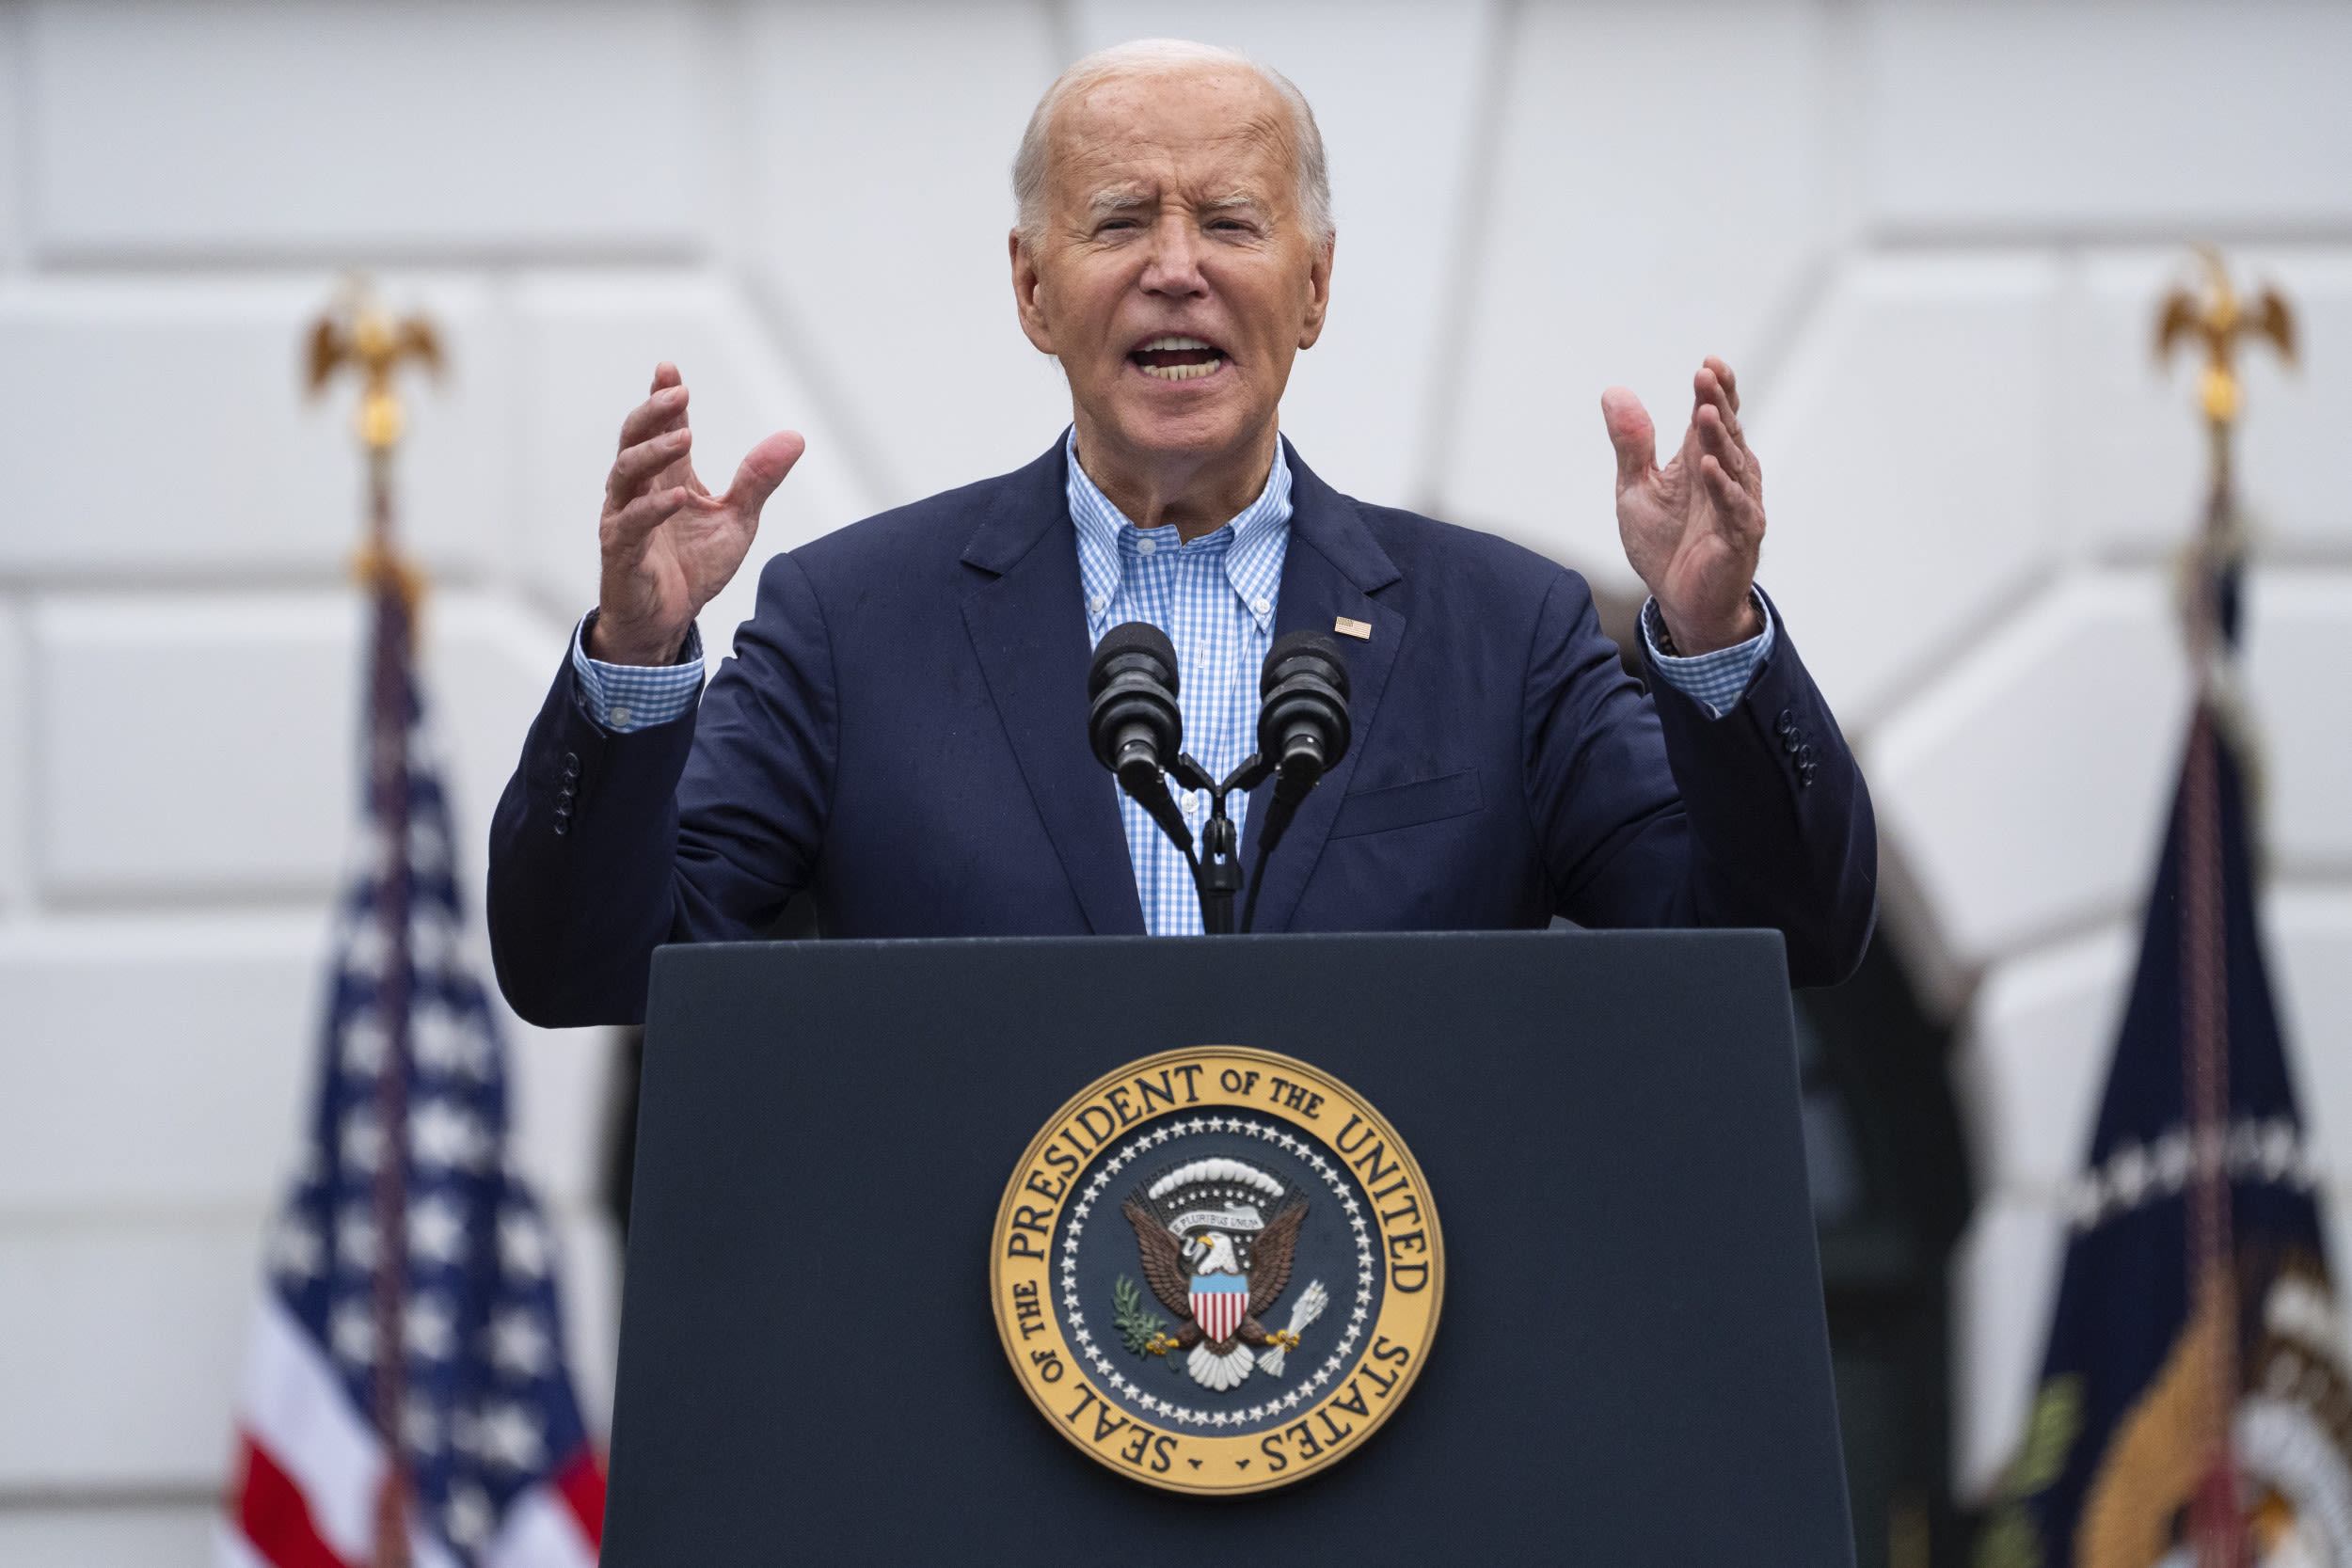 Joe Biden's gaffes during post-debate interview raise eyebrows